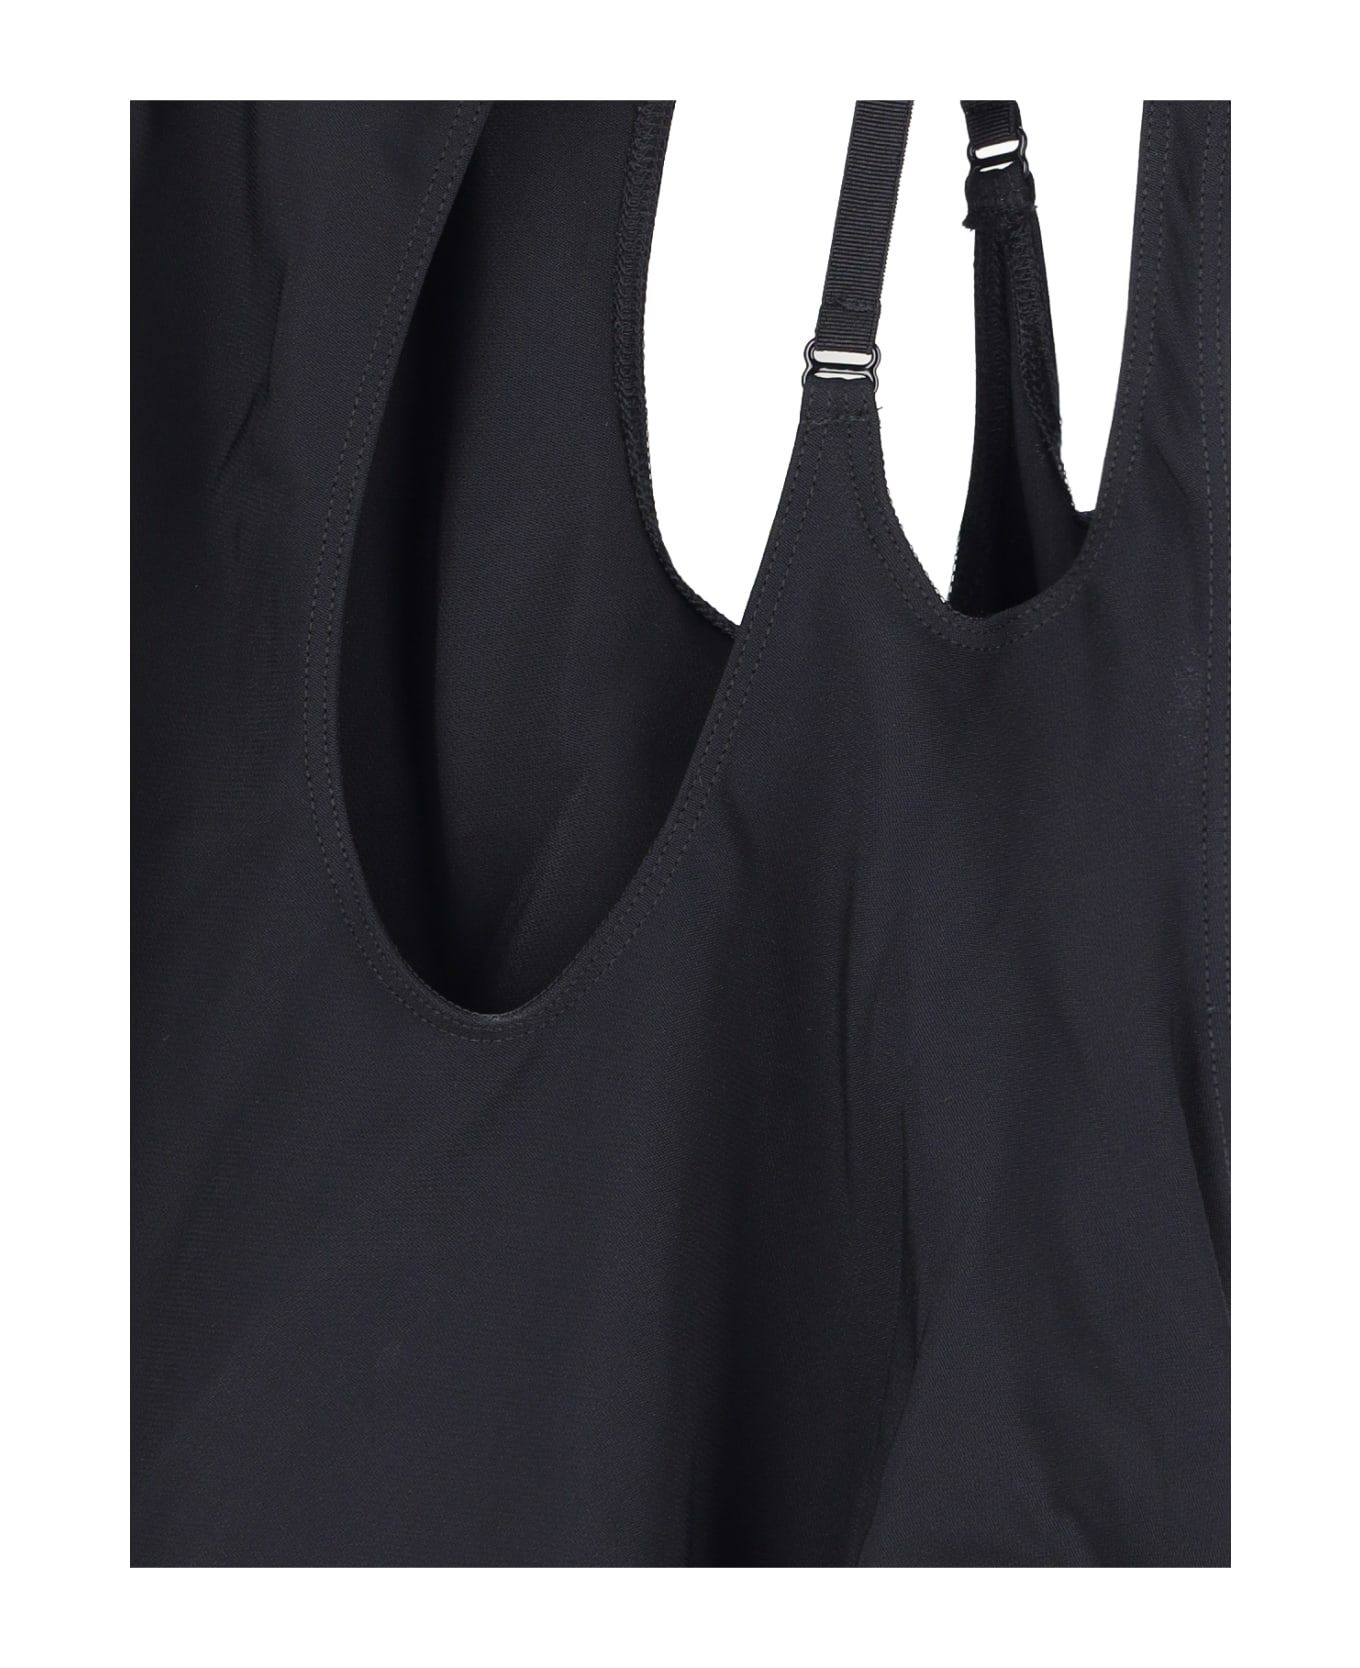 Mugler 'asymmetric Dress' Midi Dress - Black  